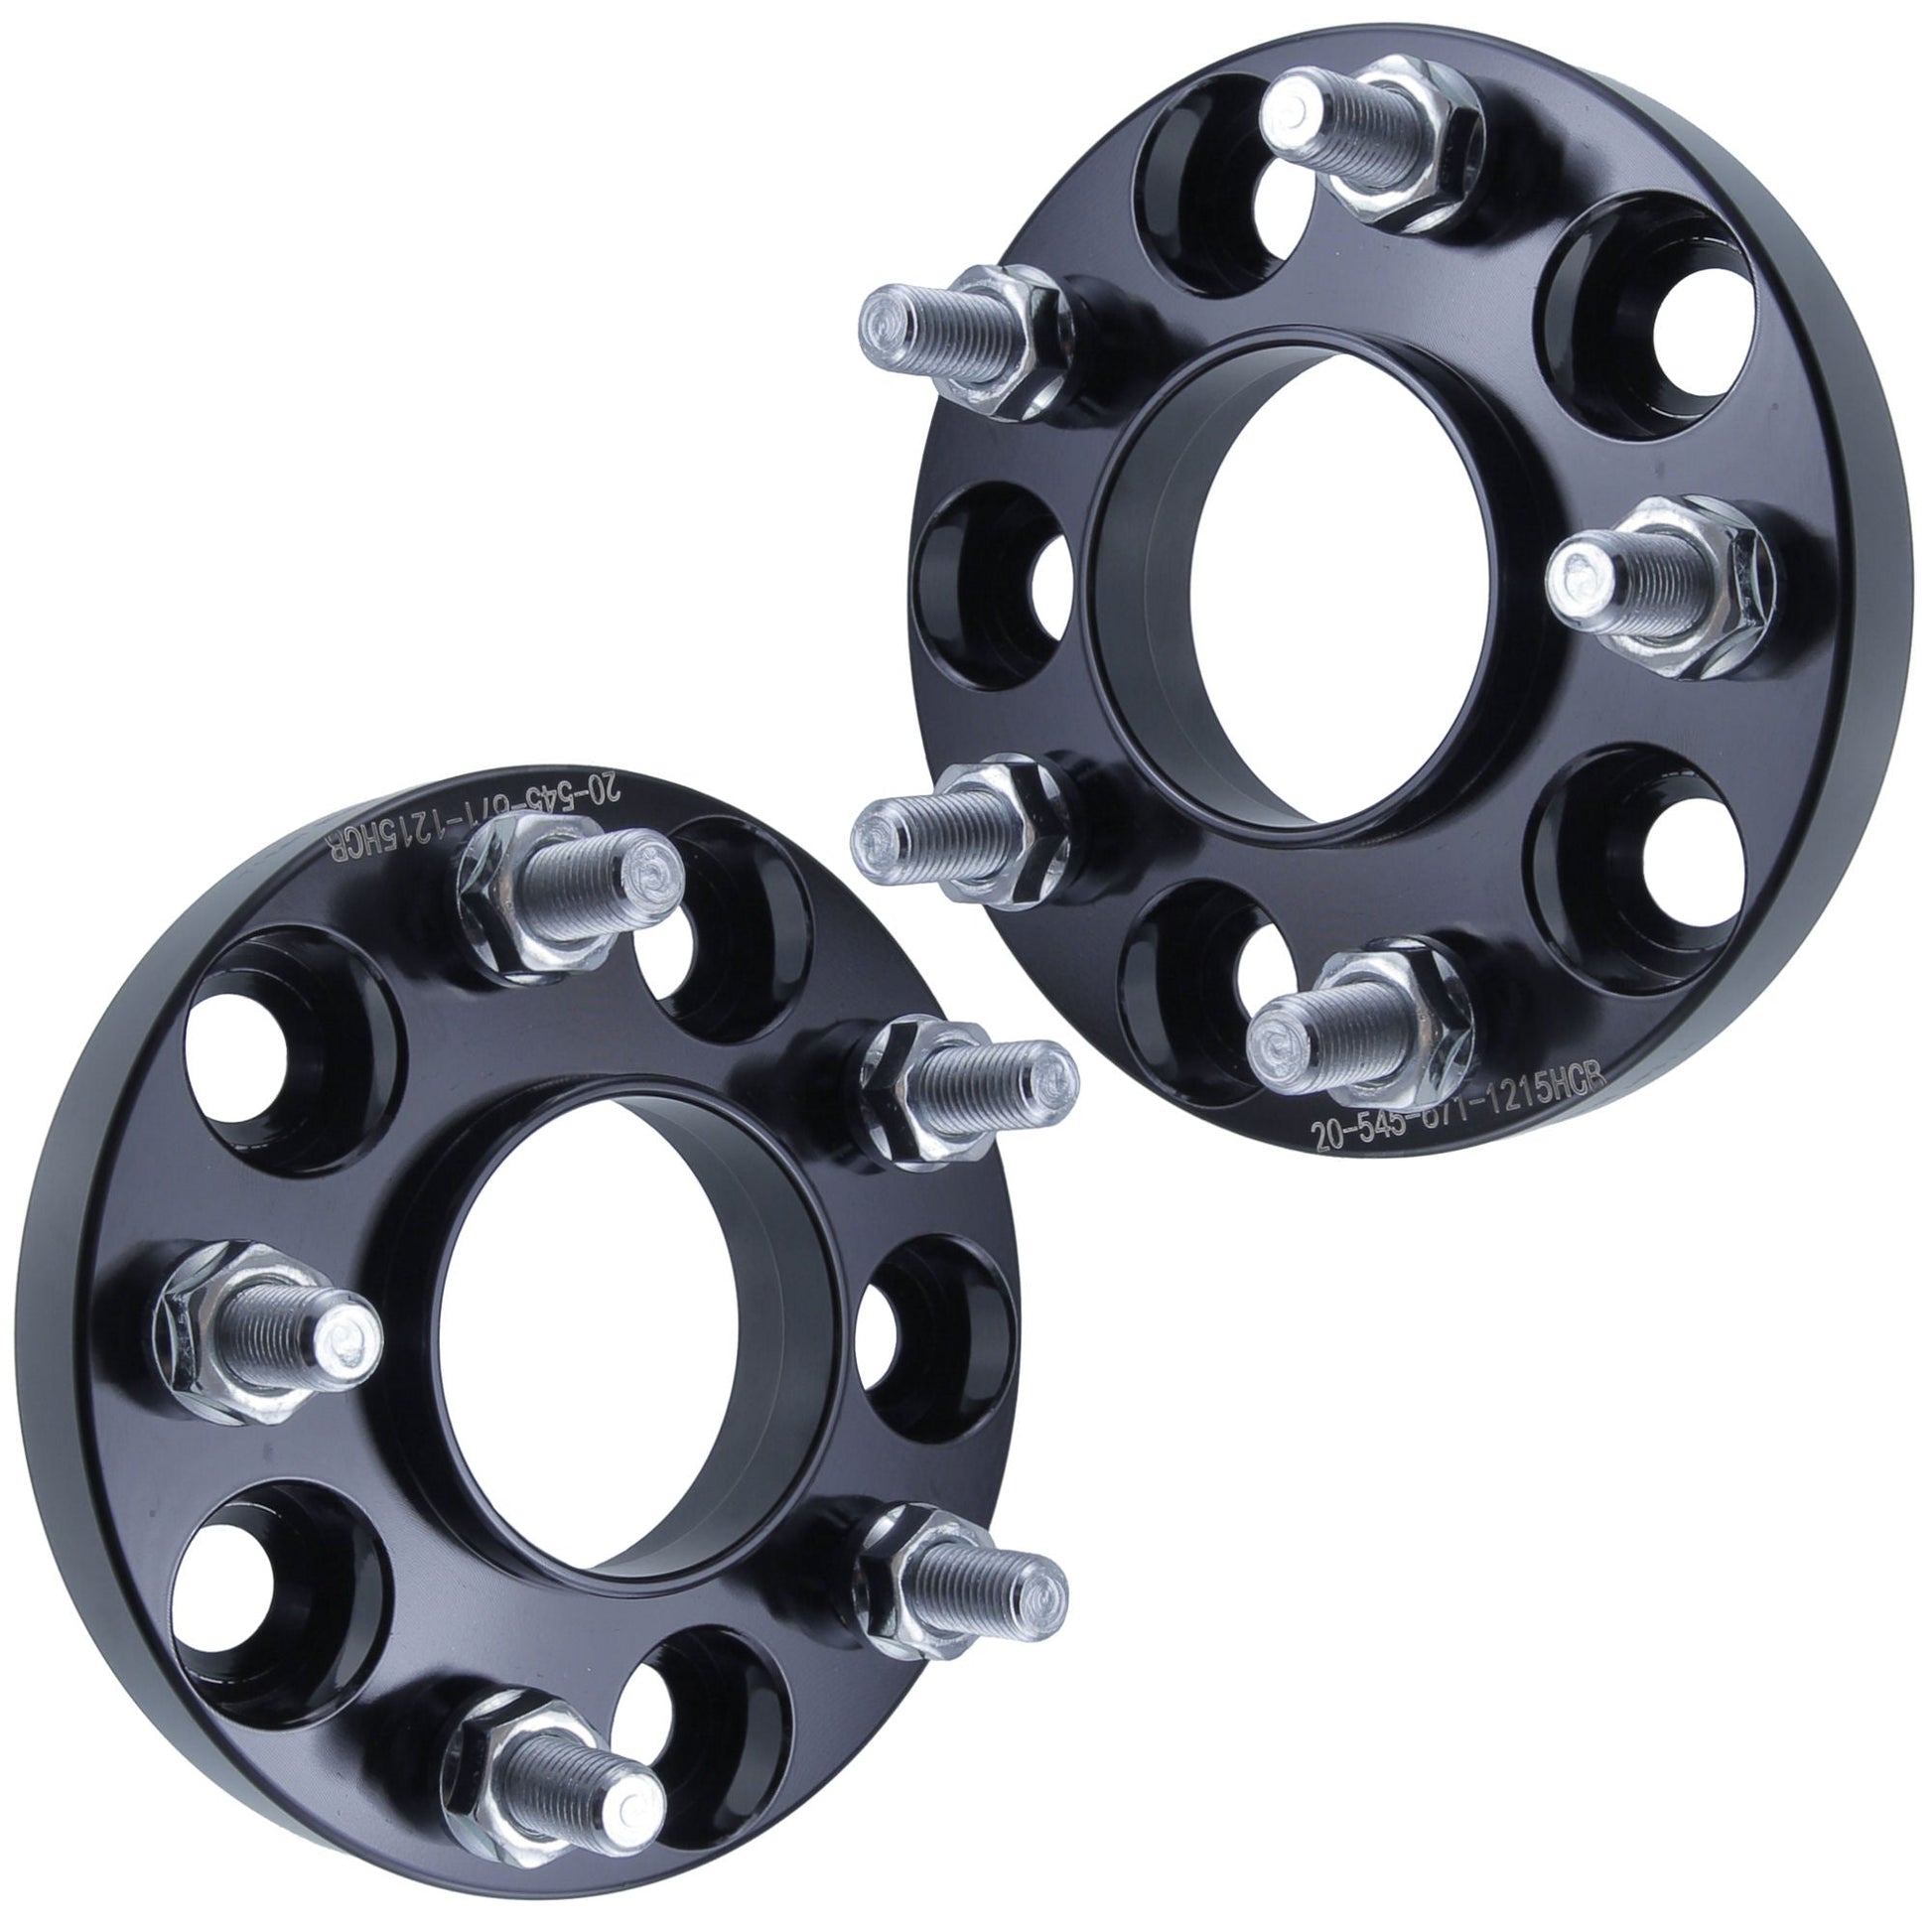 20mm Titan Wheel Spacers for Mazda RX 7 RX 8 Miata MX-5 | 5x114.3 (5x4.5) | 67.1 Hubcentric |12x1.5 Studs |  Set of 4 | Titan Wheel Accessories